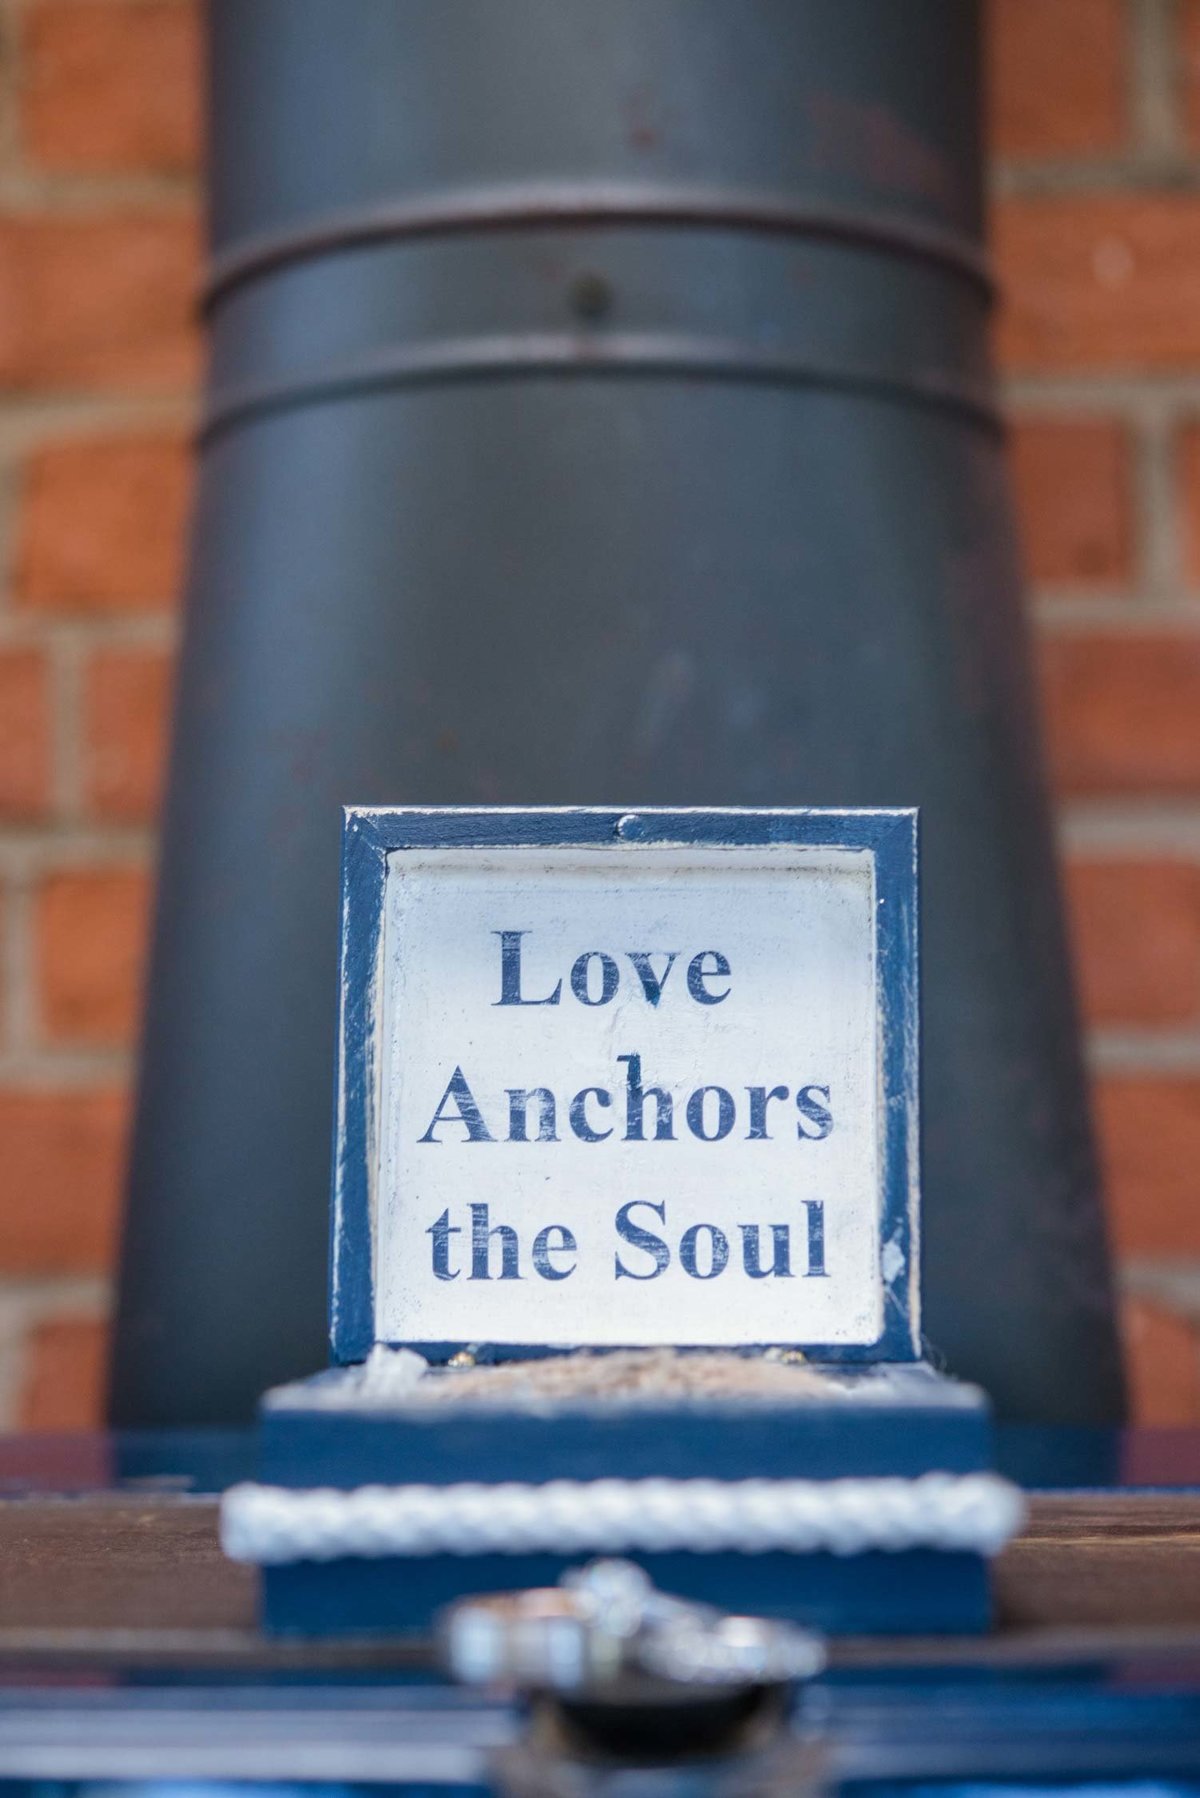 Love anchors the soul sign at The Ram's Head Inn